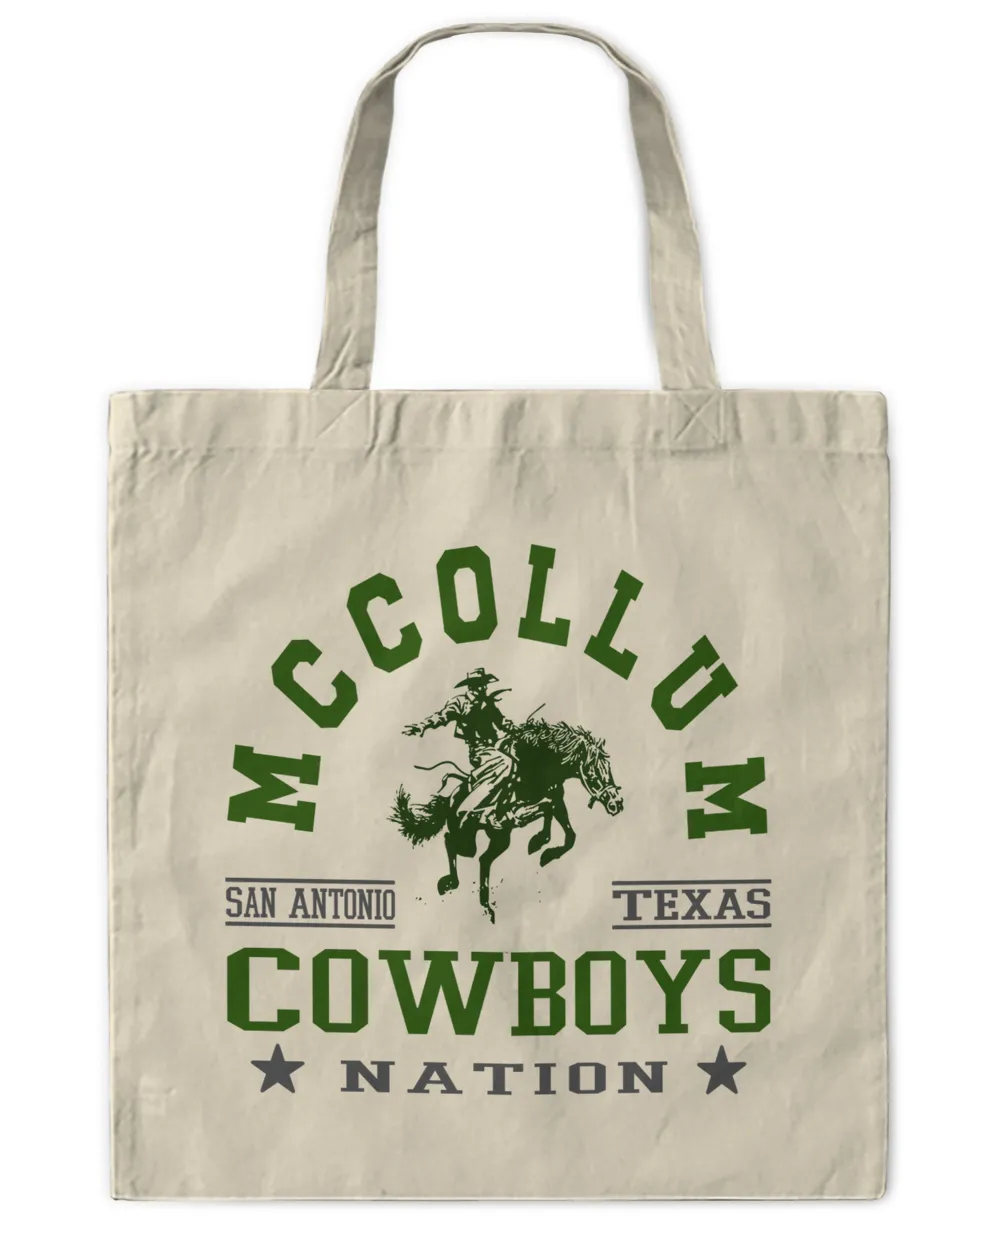 McCollum Cowboys Nation TX